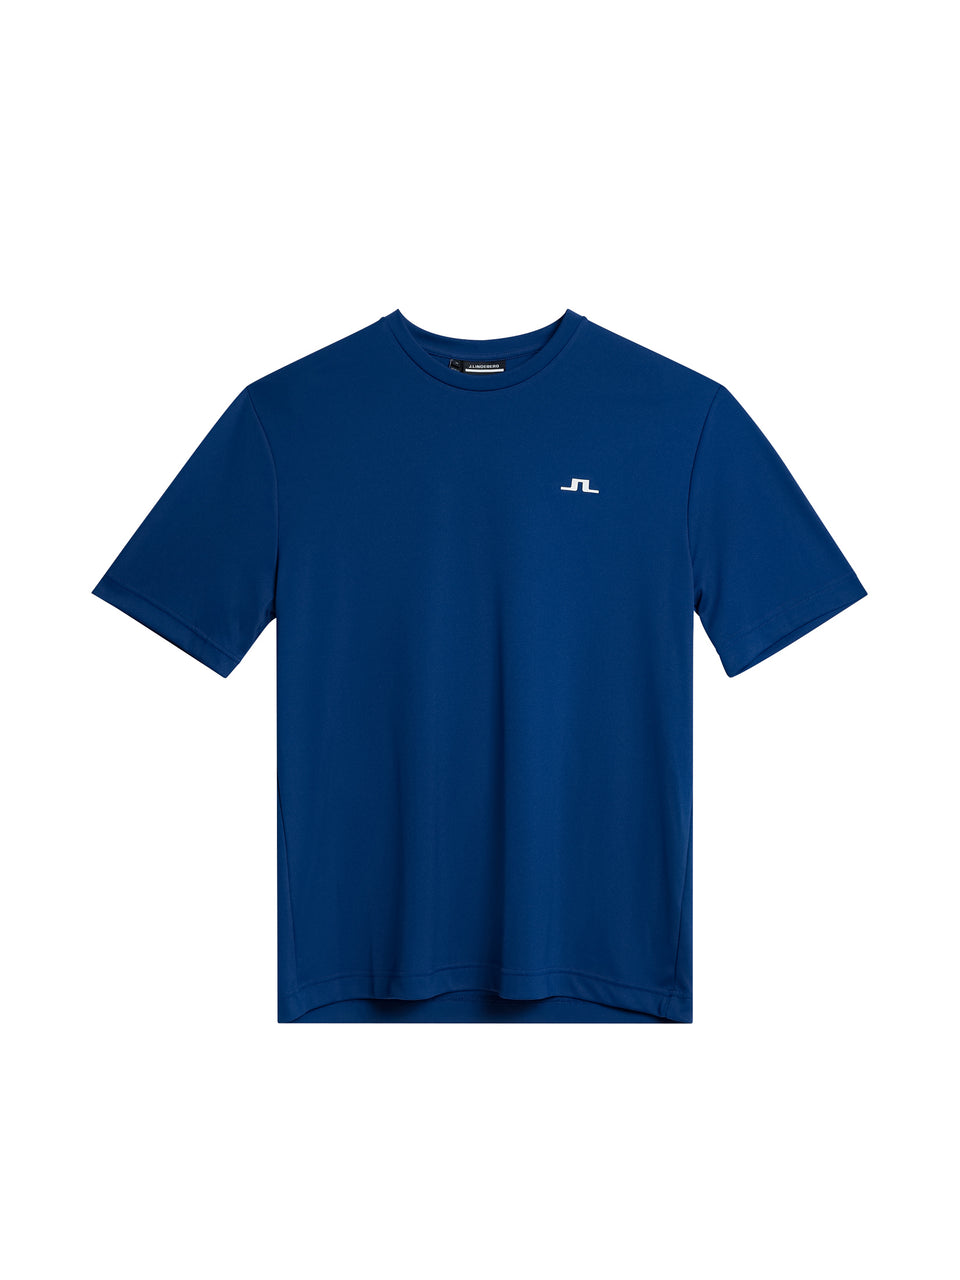 Ade T-shirt / Estate Blue